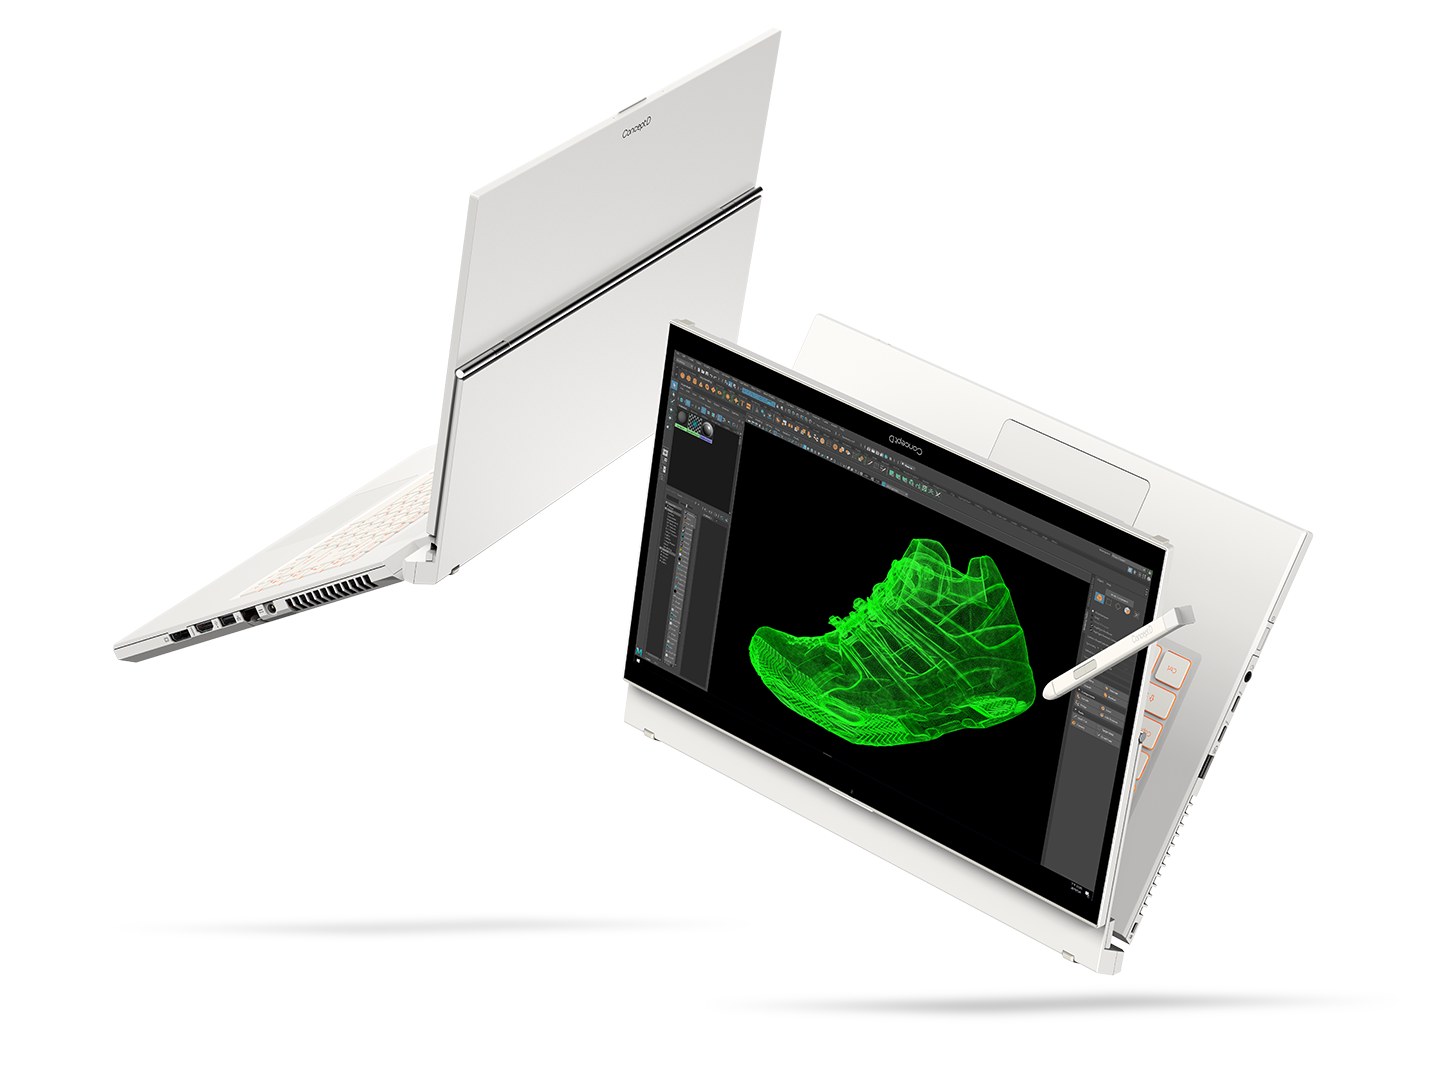 Acer's ConceptD 7 Ezel is a smaller transforming laptop designed for creators